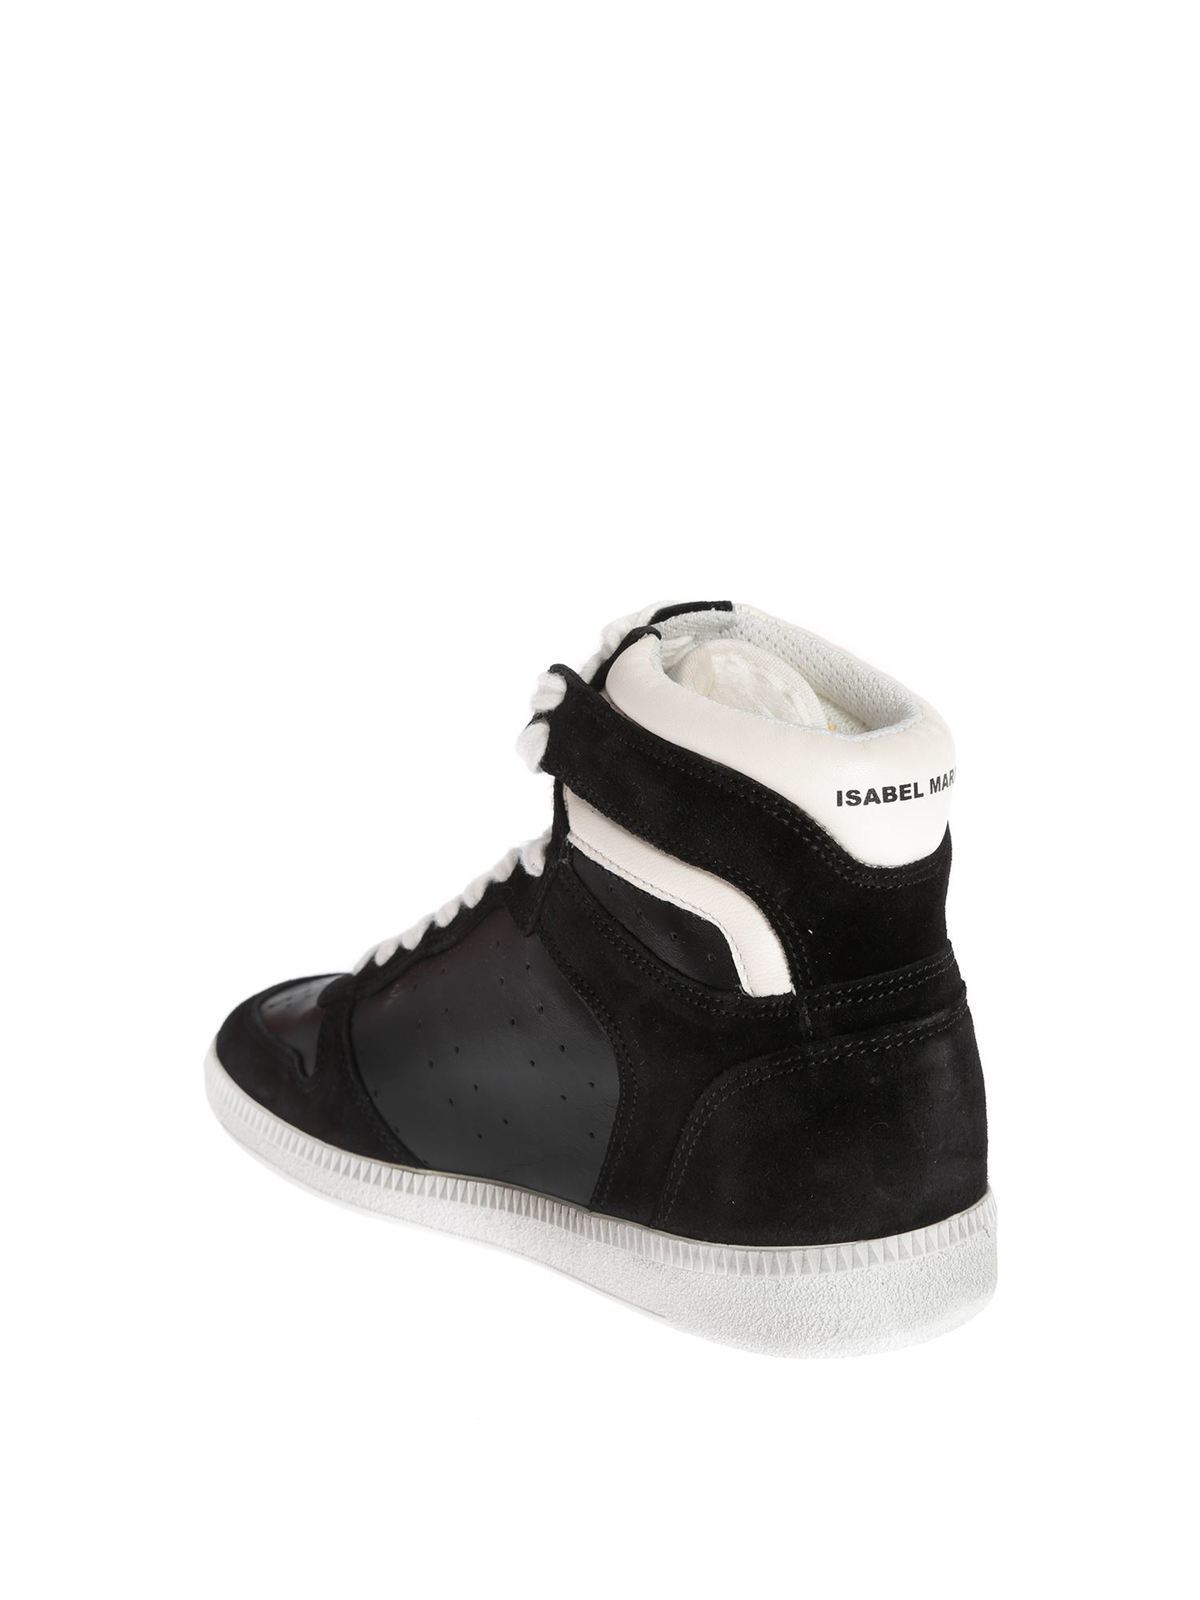 Isabel Marant sneakers in black - BK007319A043SBLACK